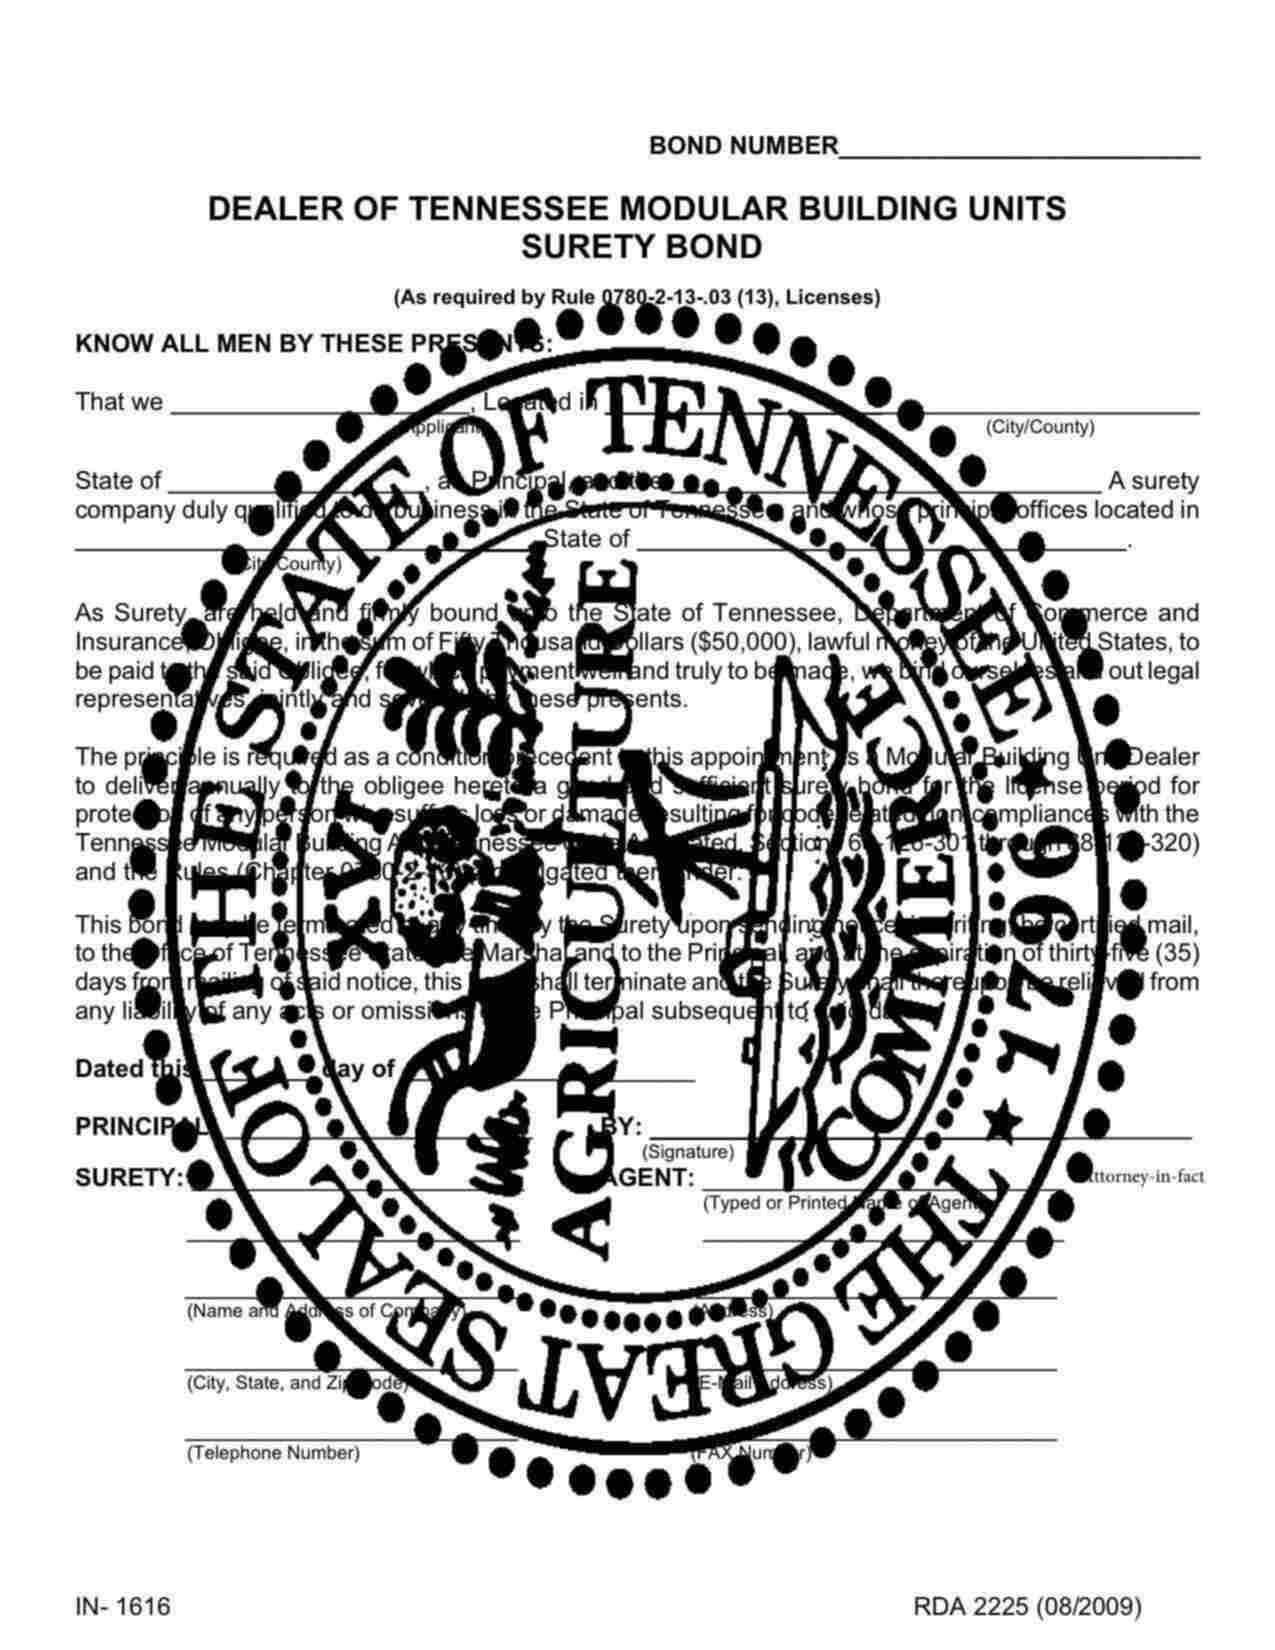 Tennessee Dealer of Modular Building Units Bond Form